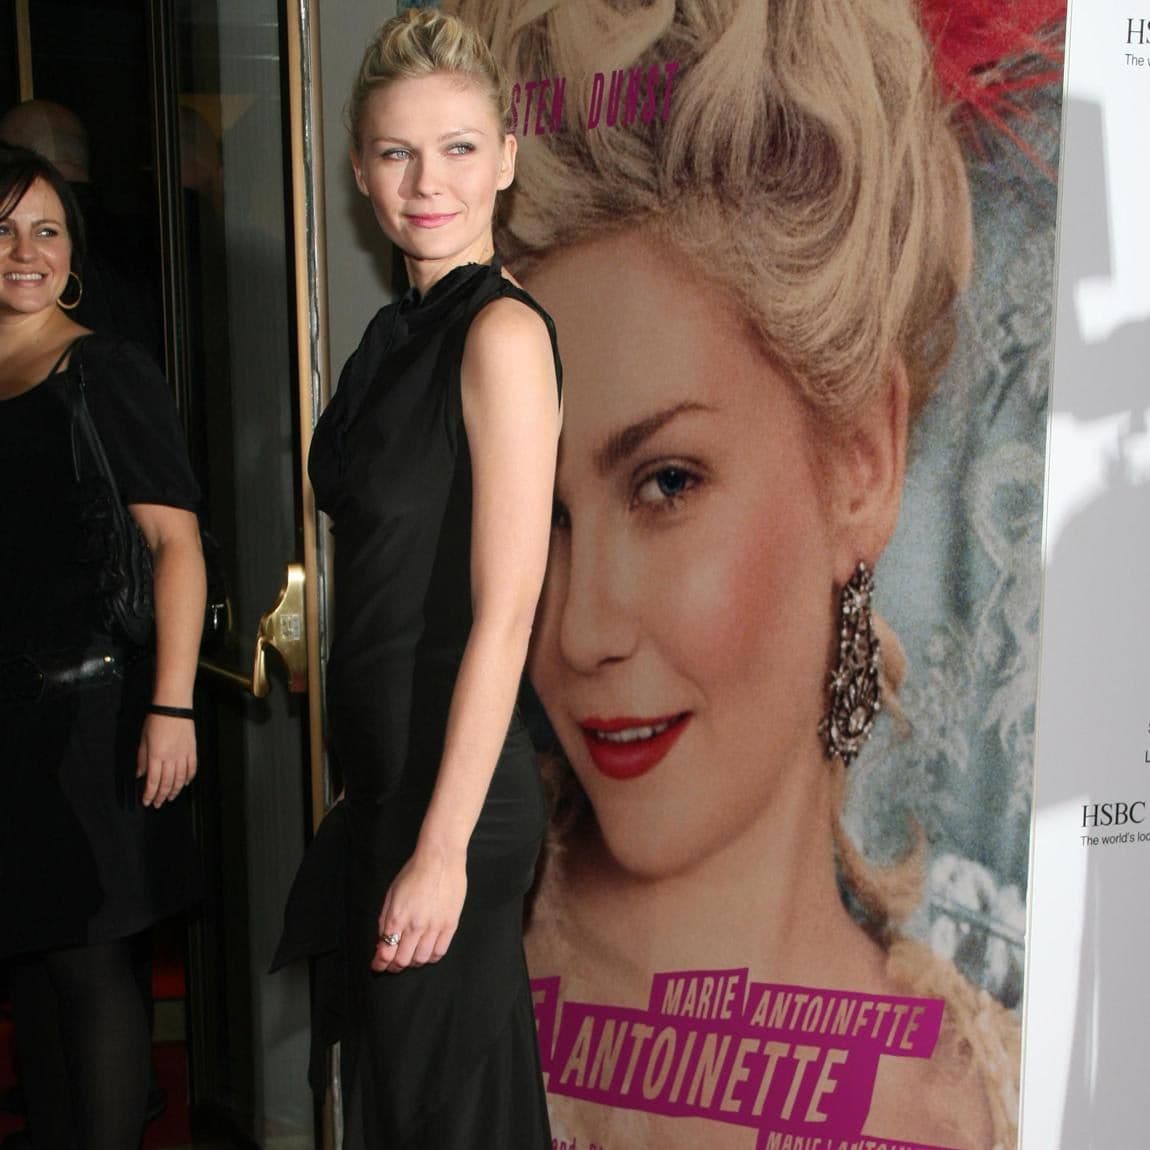 Columbia Pictures New York Film Festival Screening of "Marie Antoinette" - Red Carpet Arrivals